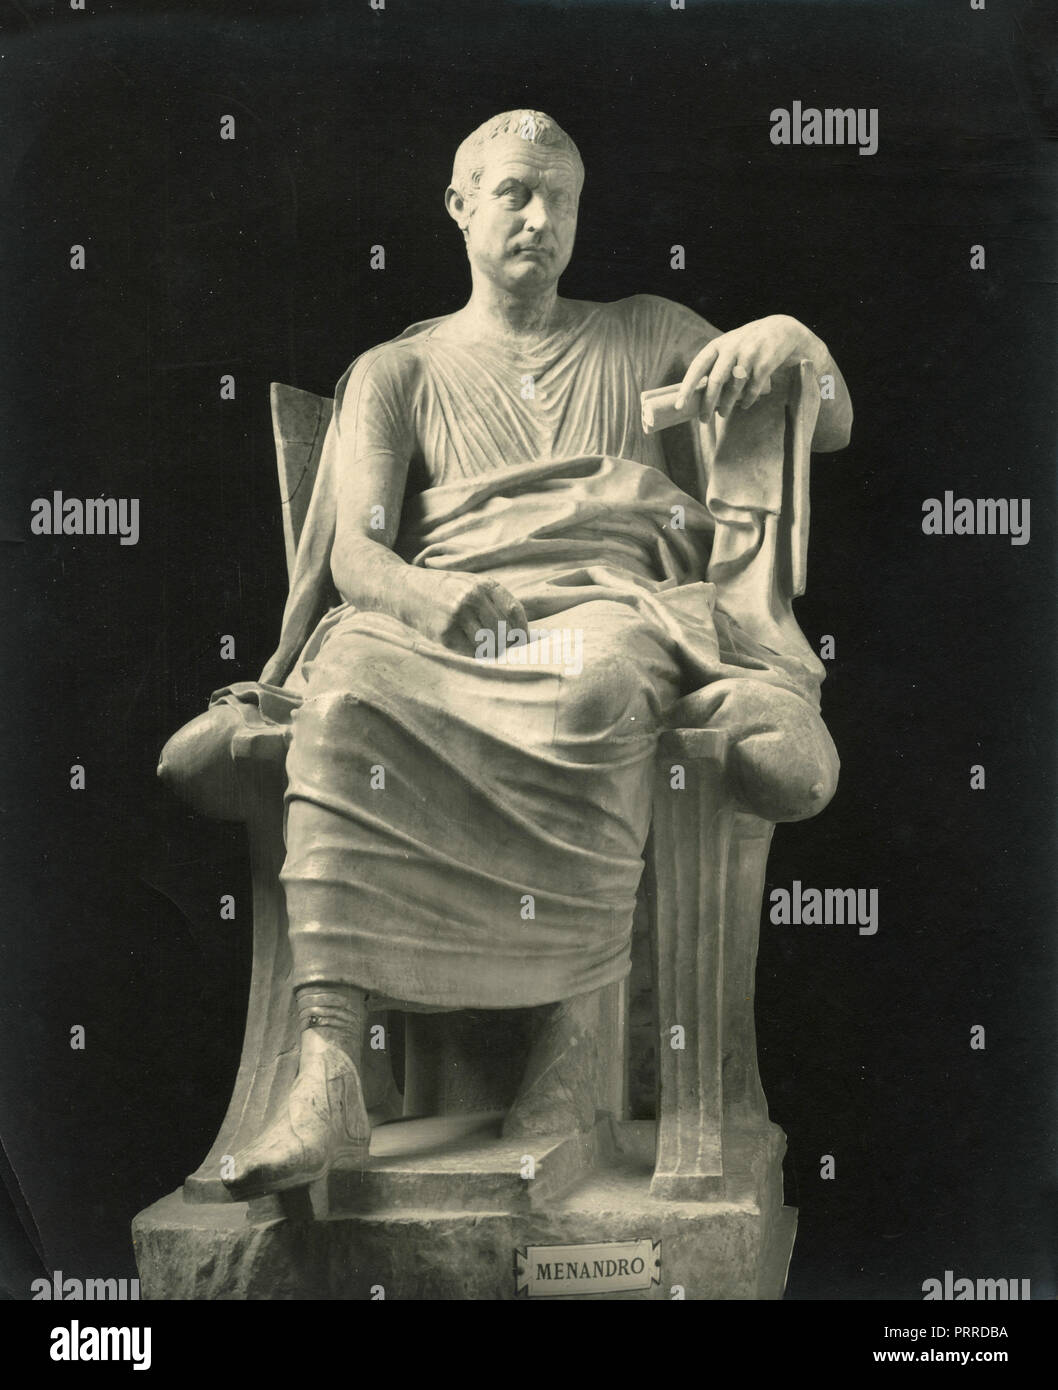 Menander, Marmor statue, 1910 s Stockfoto